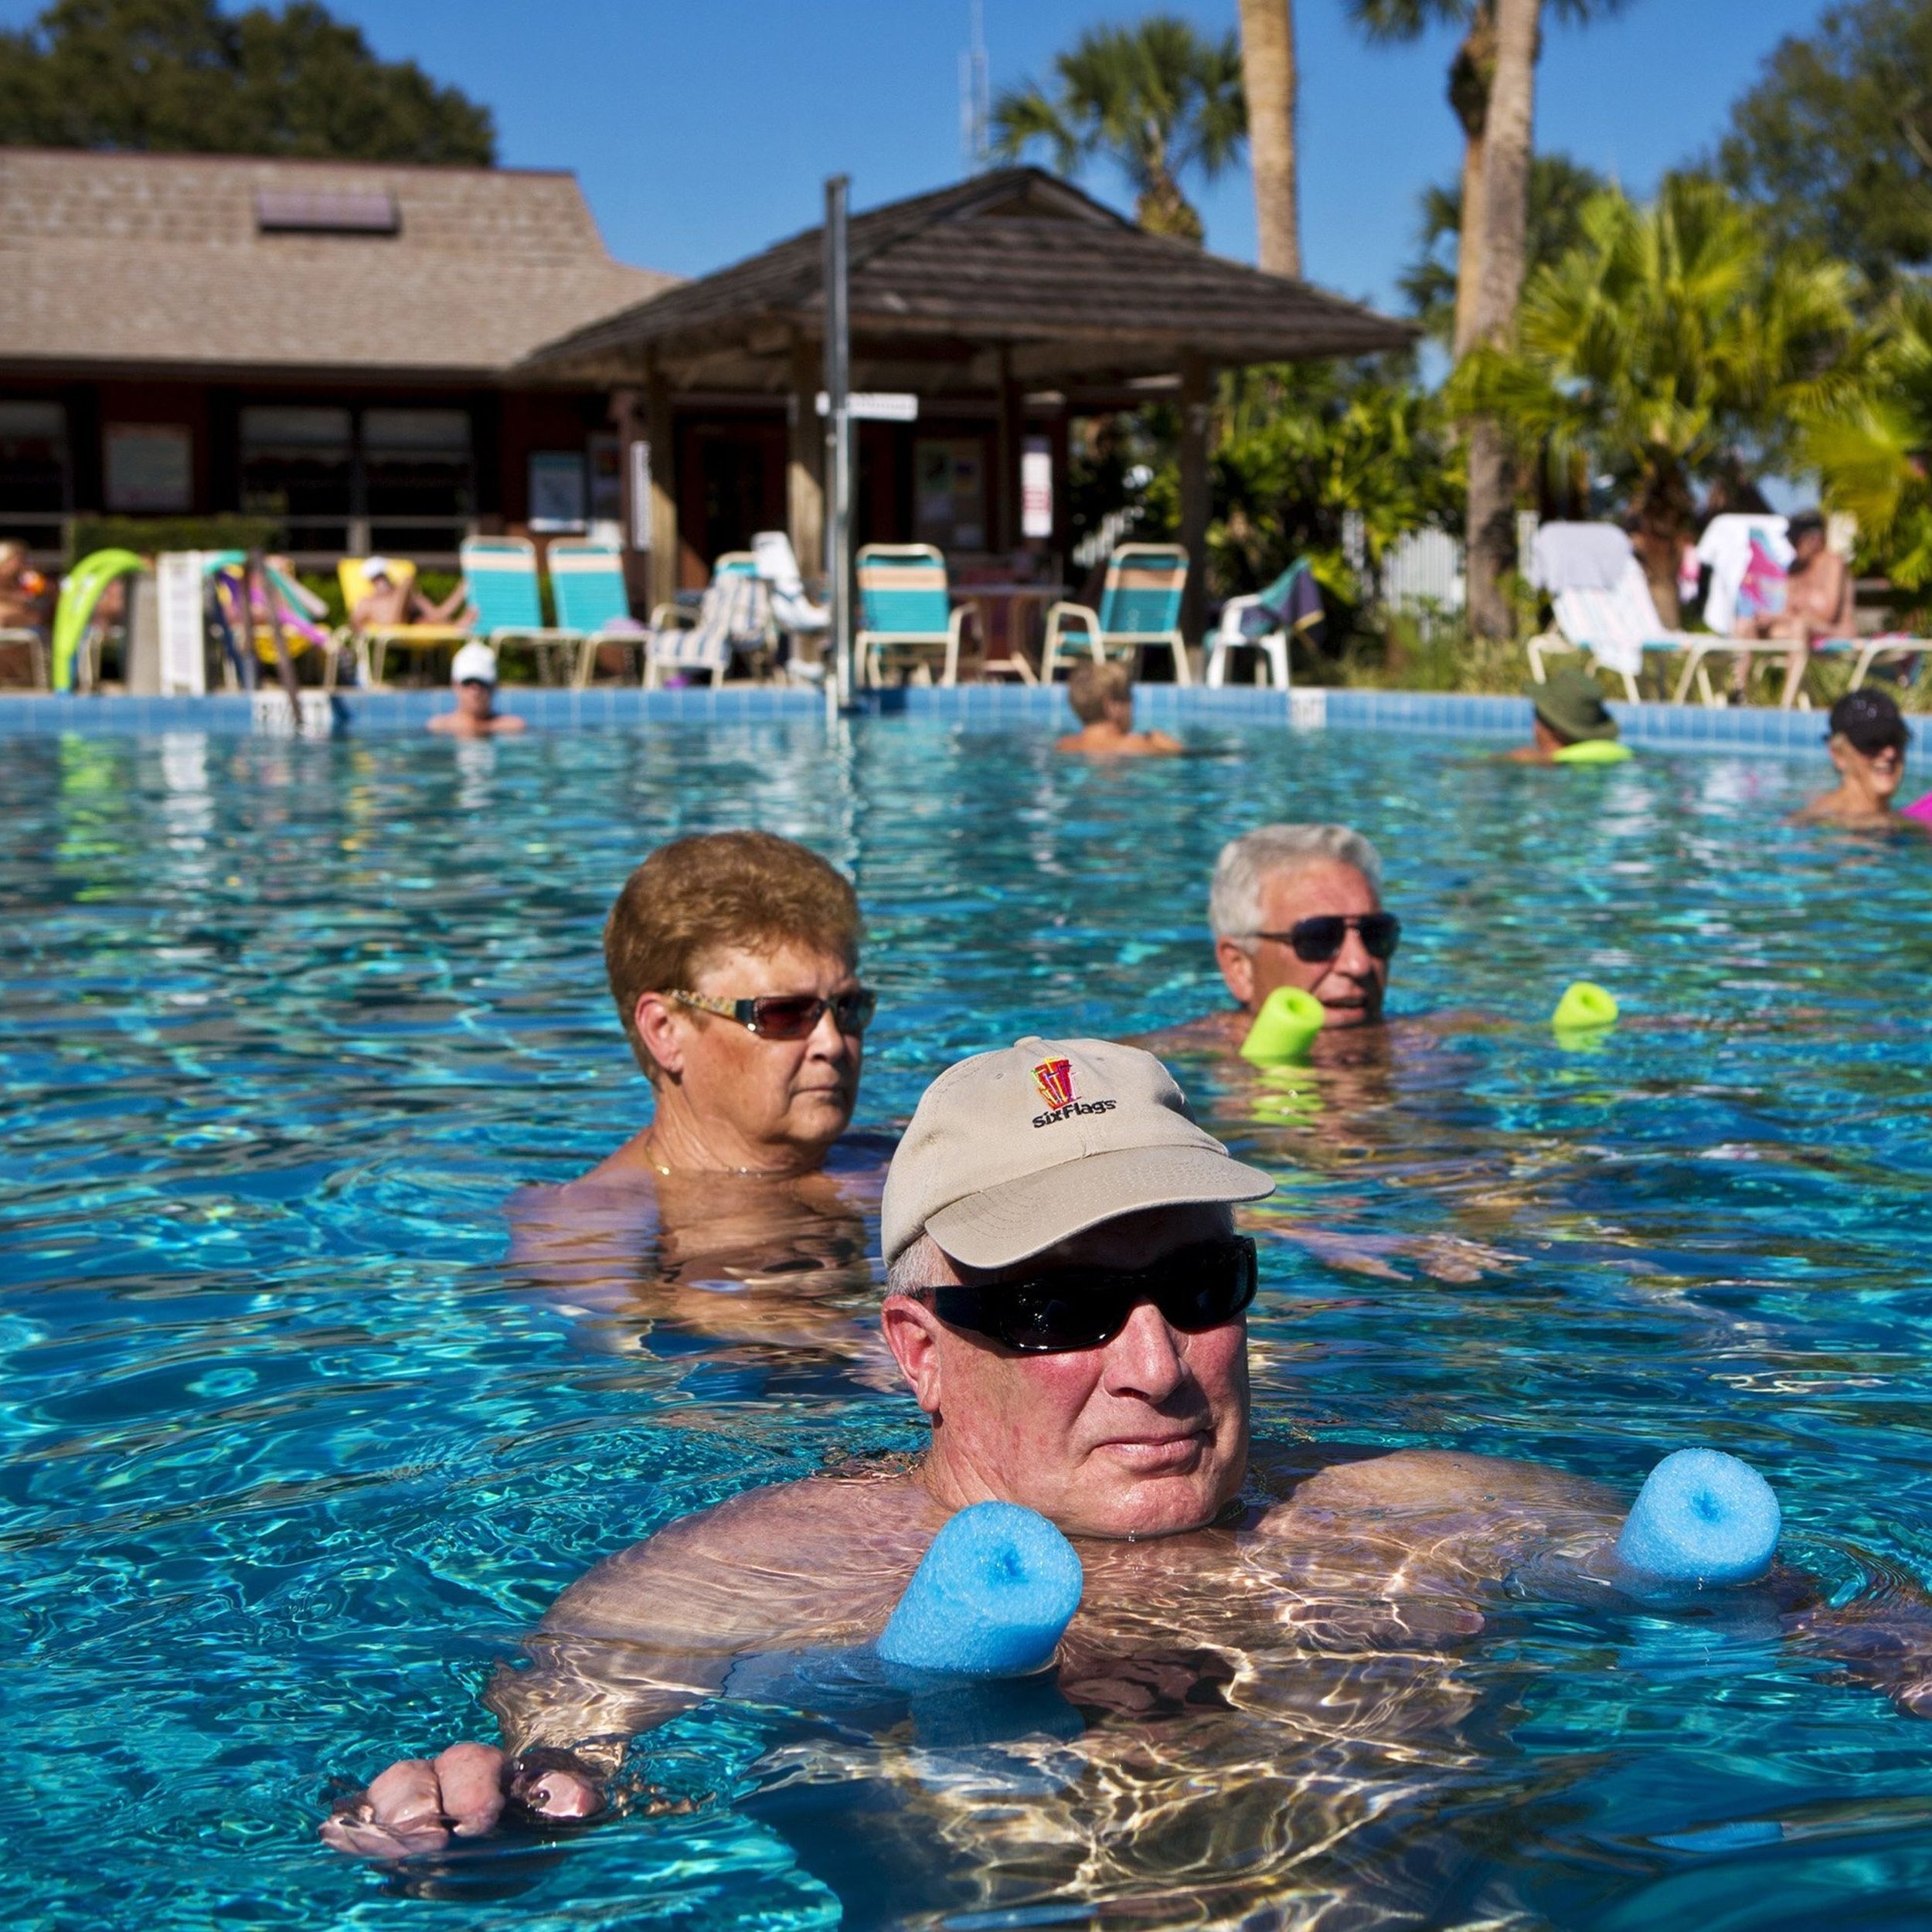 Florida nudist resort celebrates its 50th anniversary | The Spokesman-Review